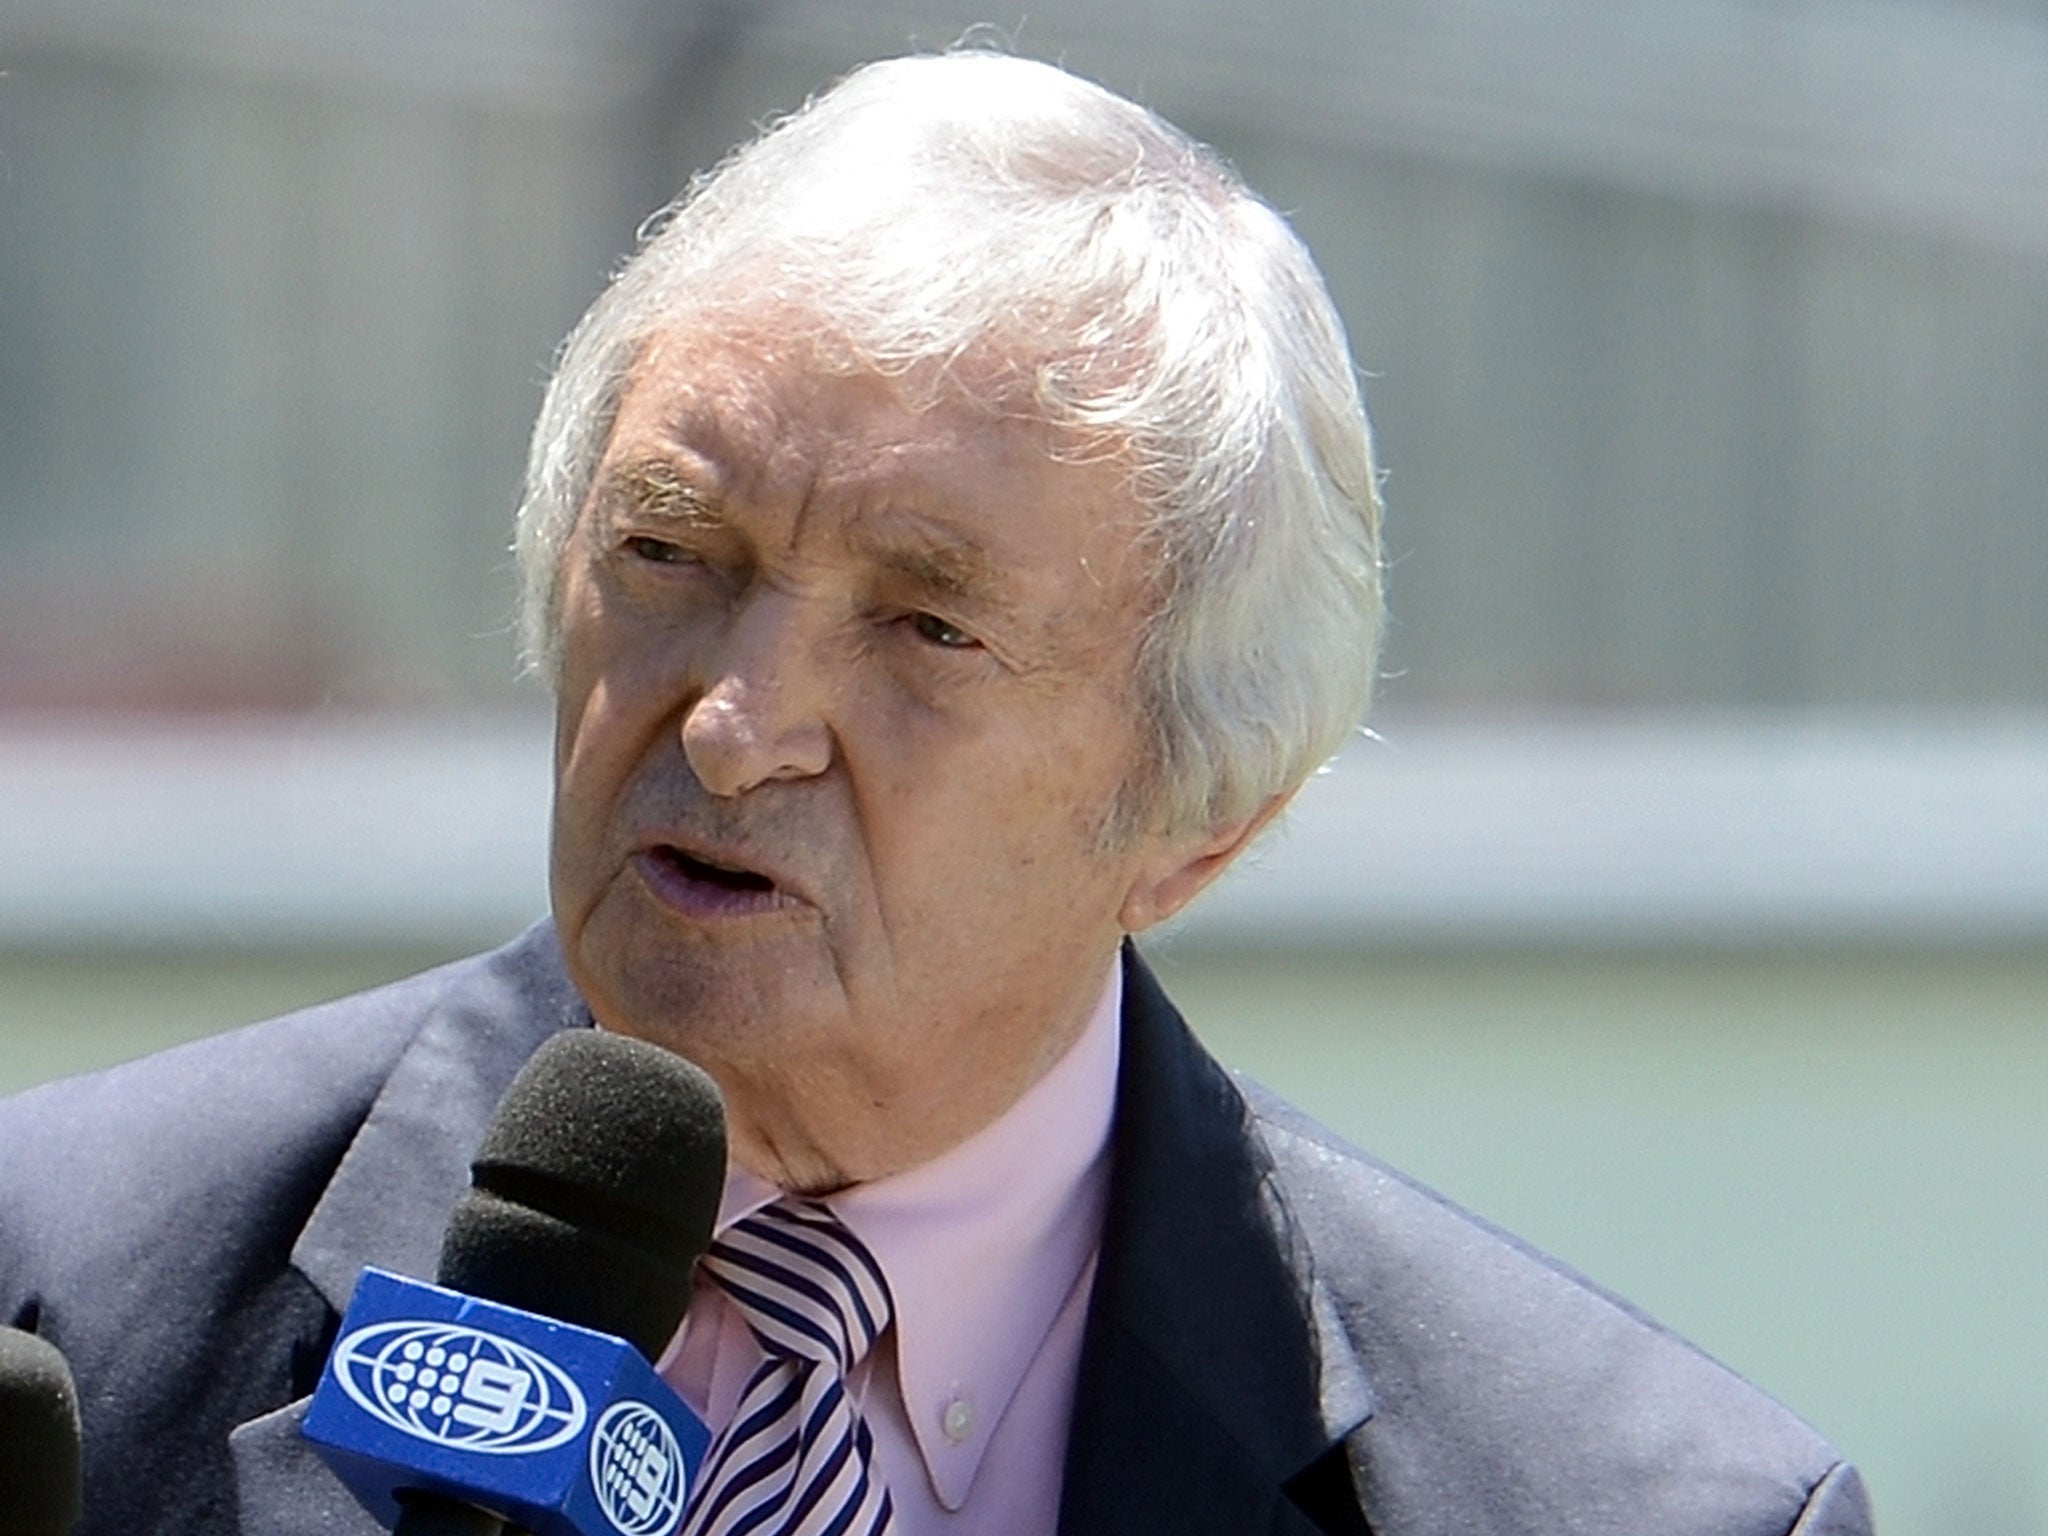 Legendary Australian cricketer and commentator Richie Benaud hosts a talk-show